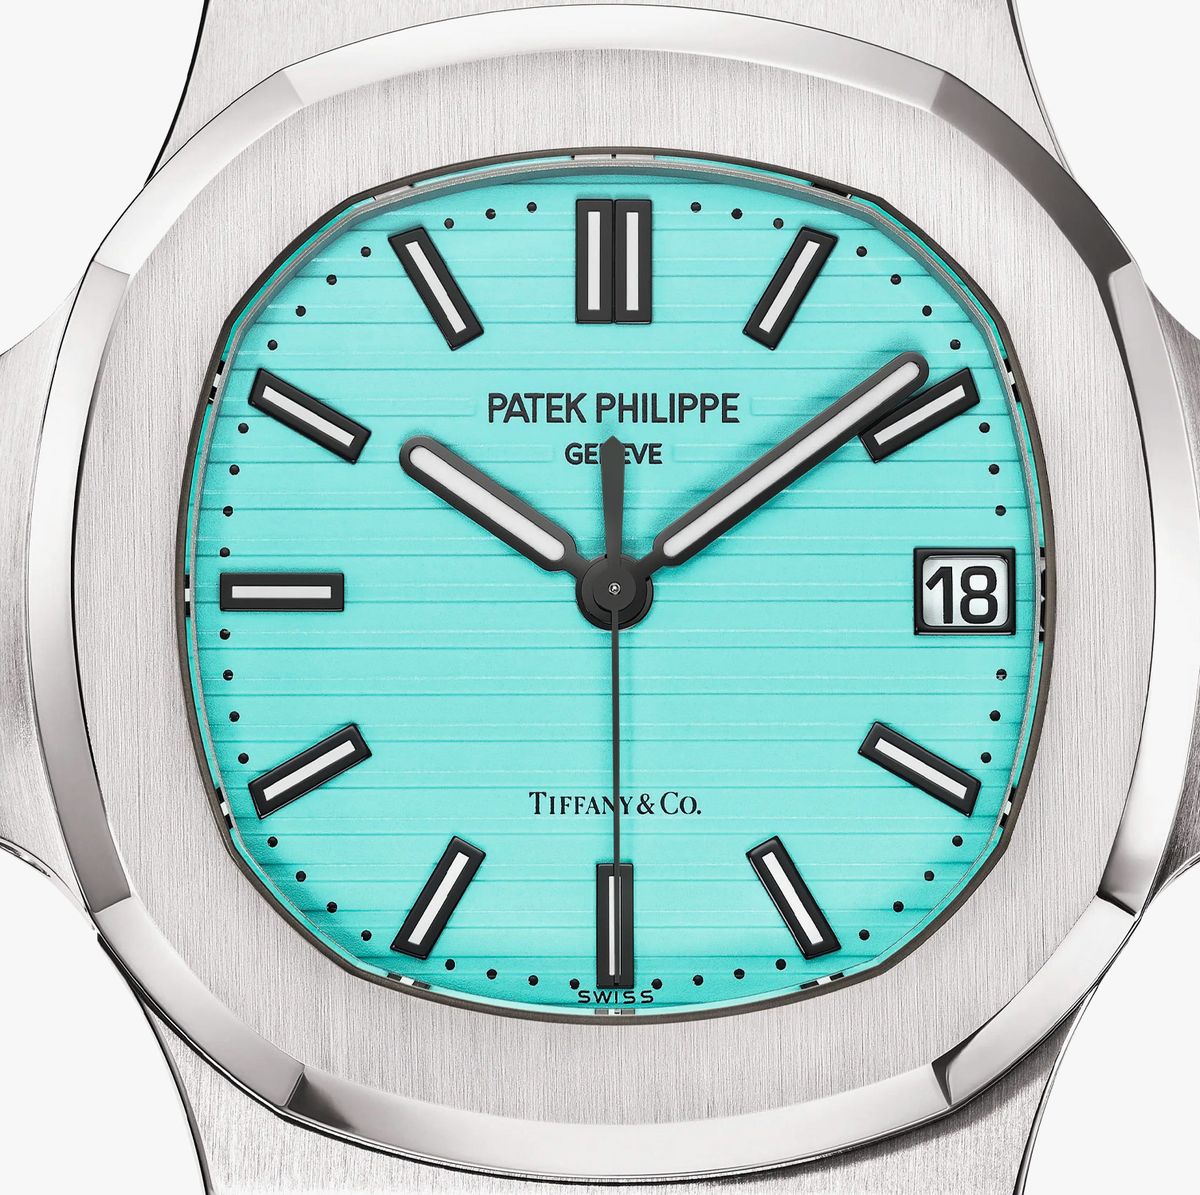 philippe tiffany watch